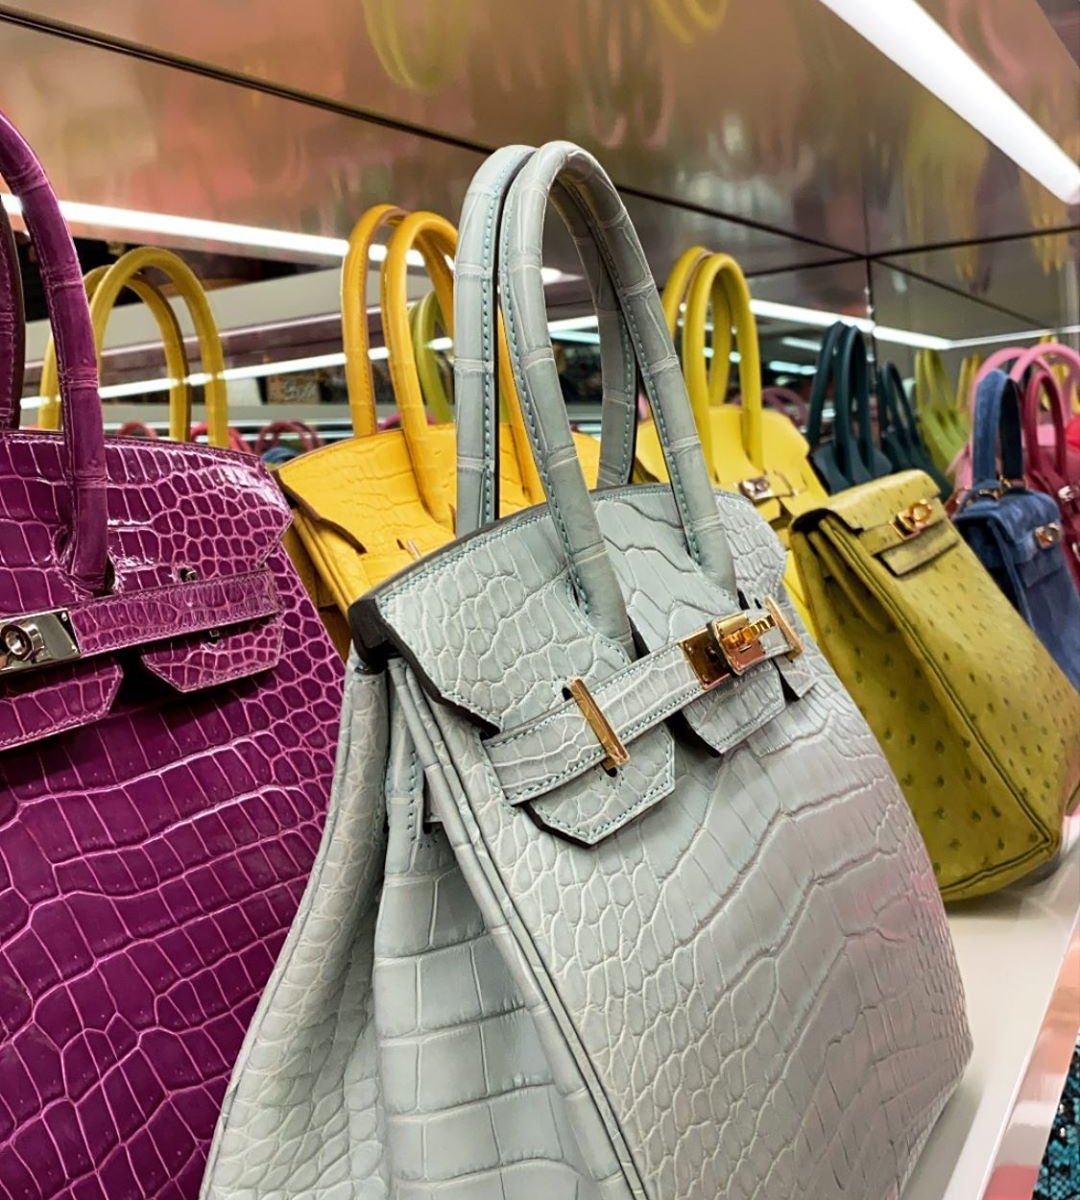 Kylie Jenner's Designer Handbag Collection: Photos of Her Purse Closet